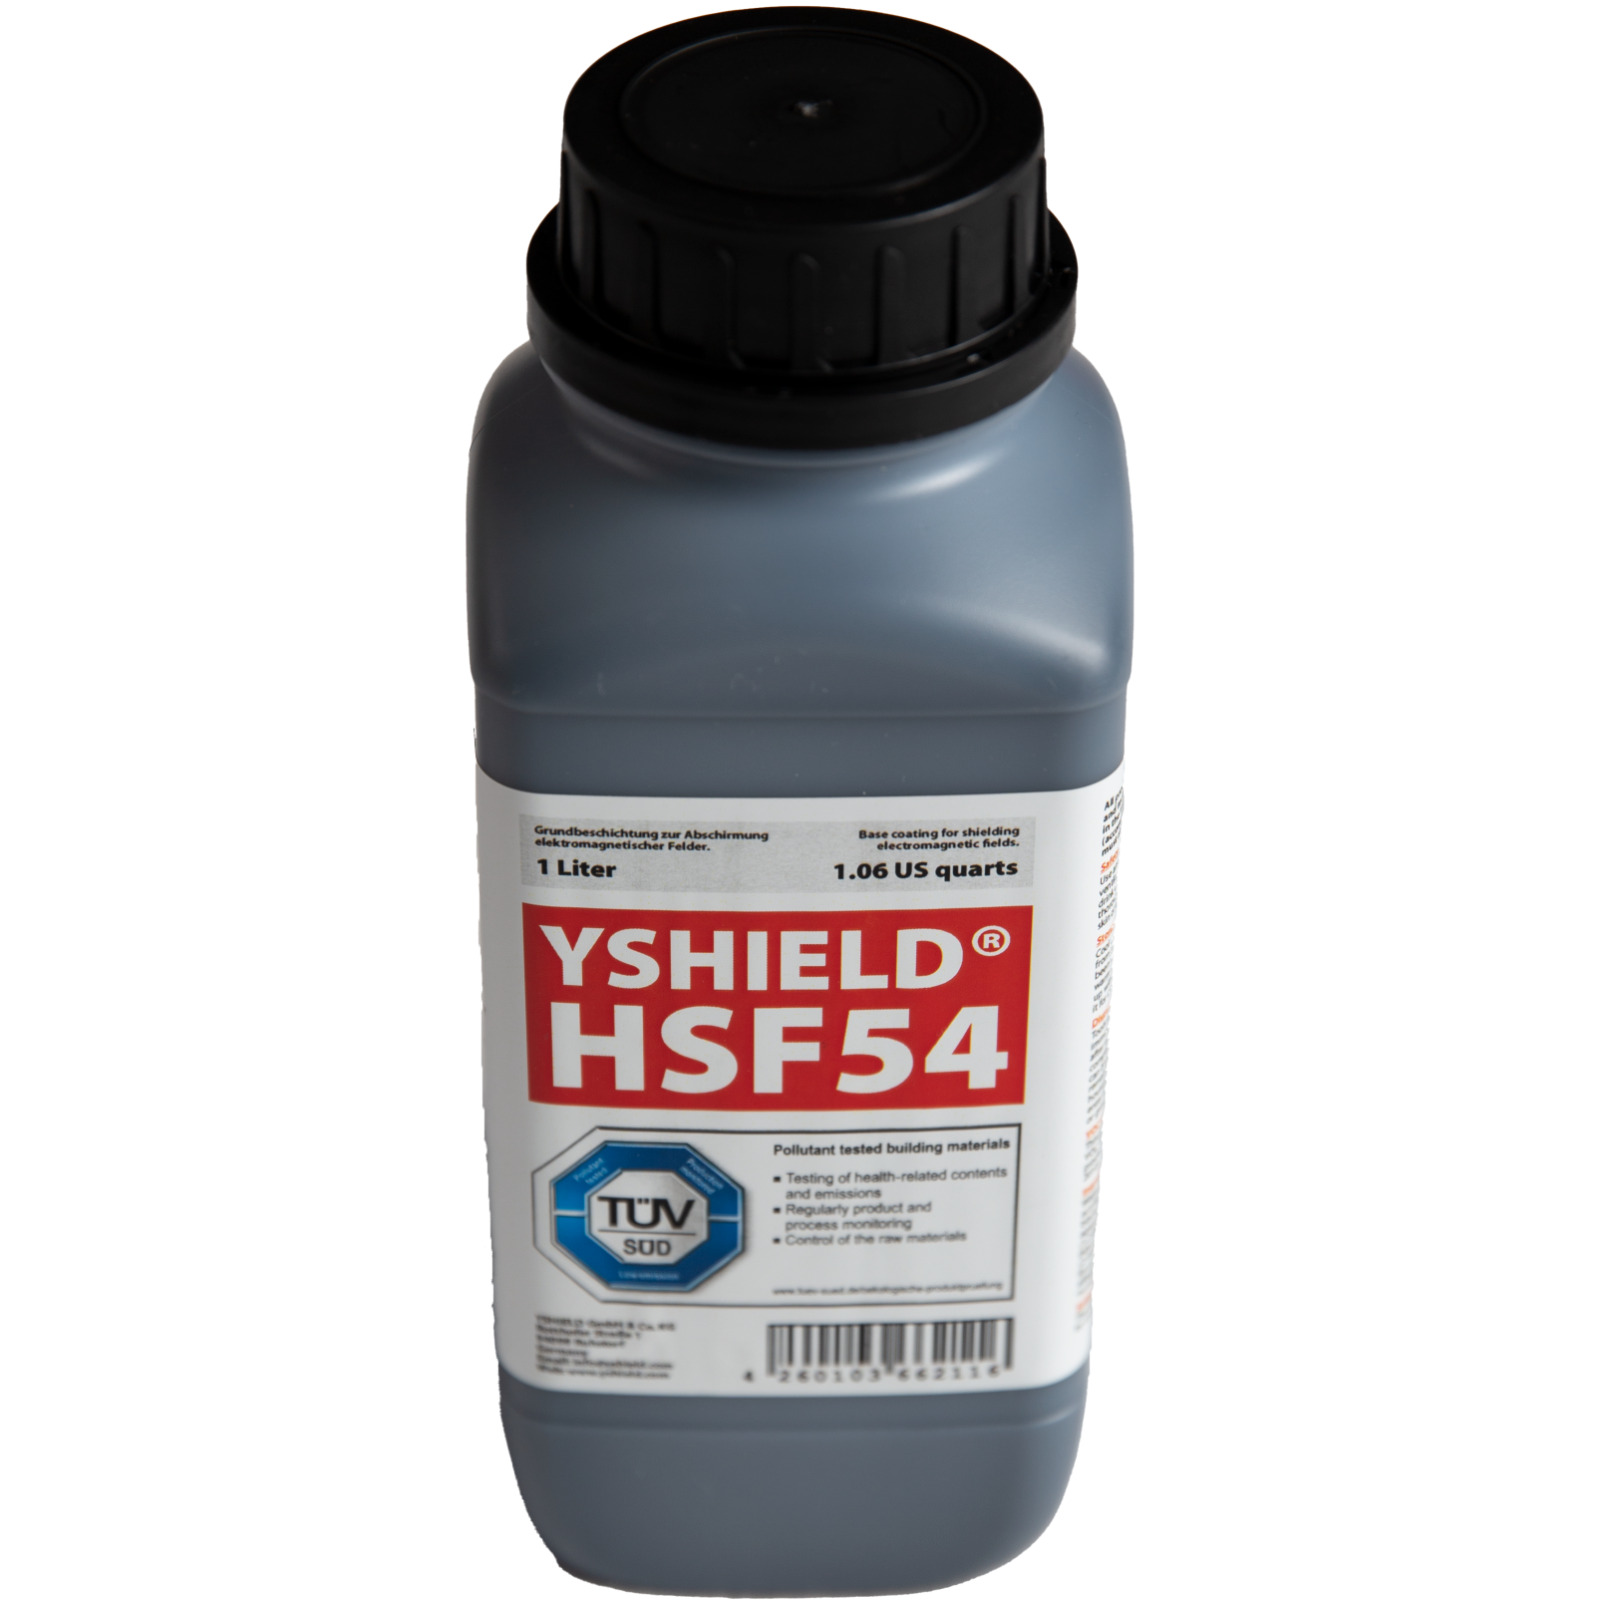 YSHIELD HSF54 - Certified EMF 5G Shielding Paint 1L (Internal/External use)